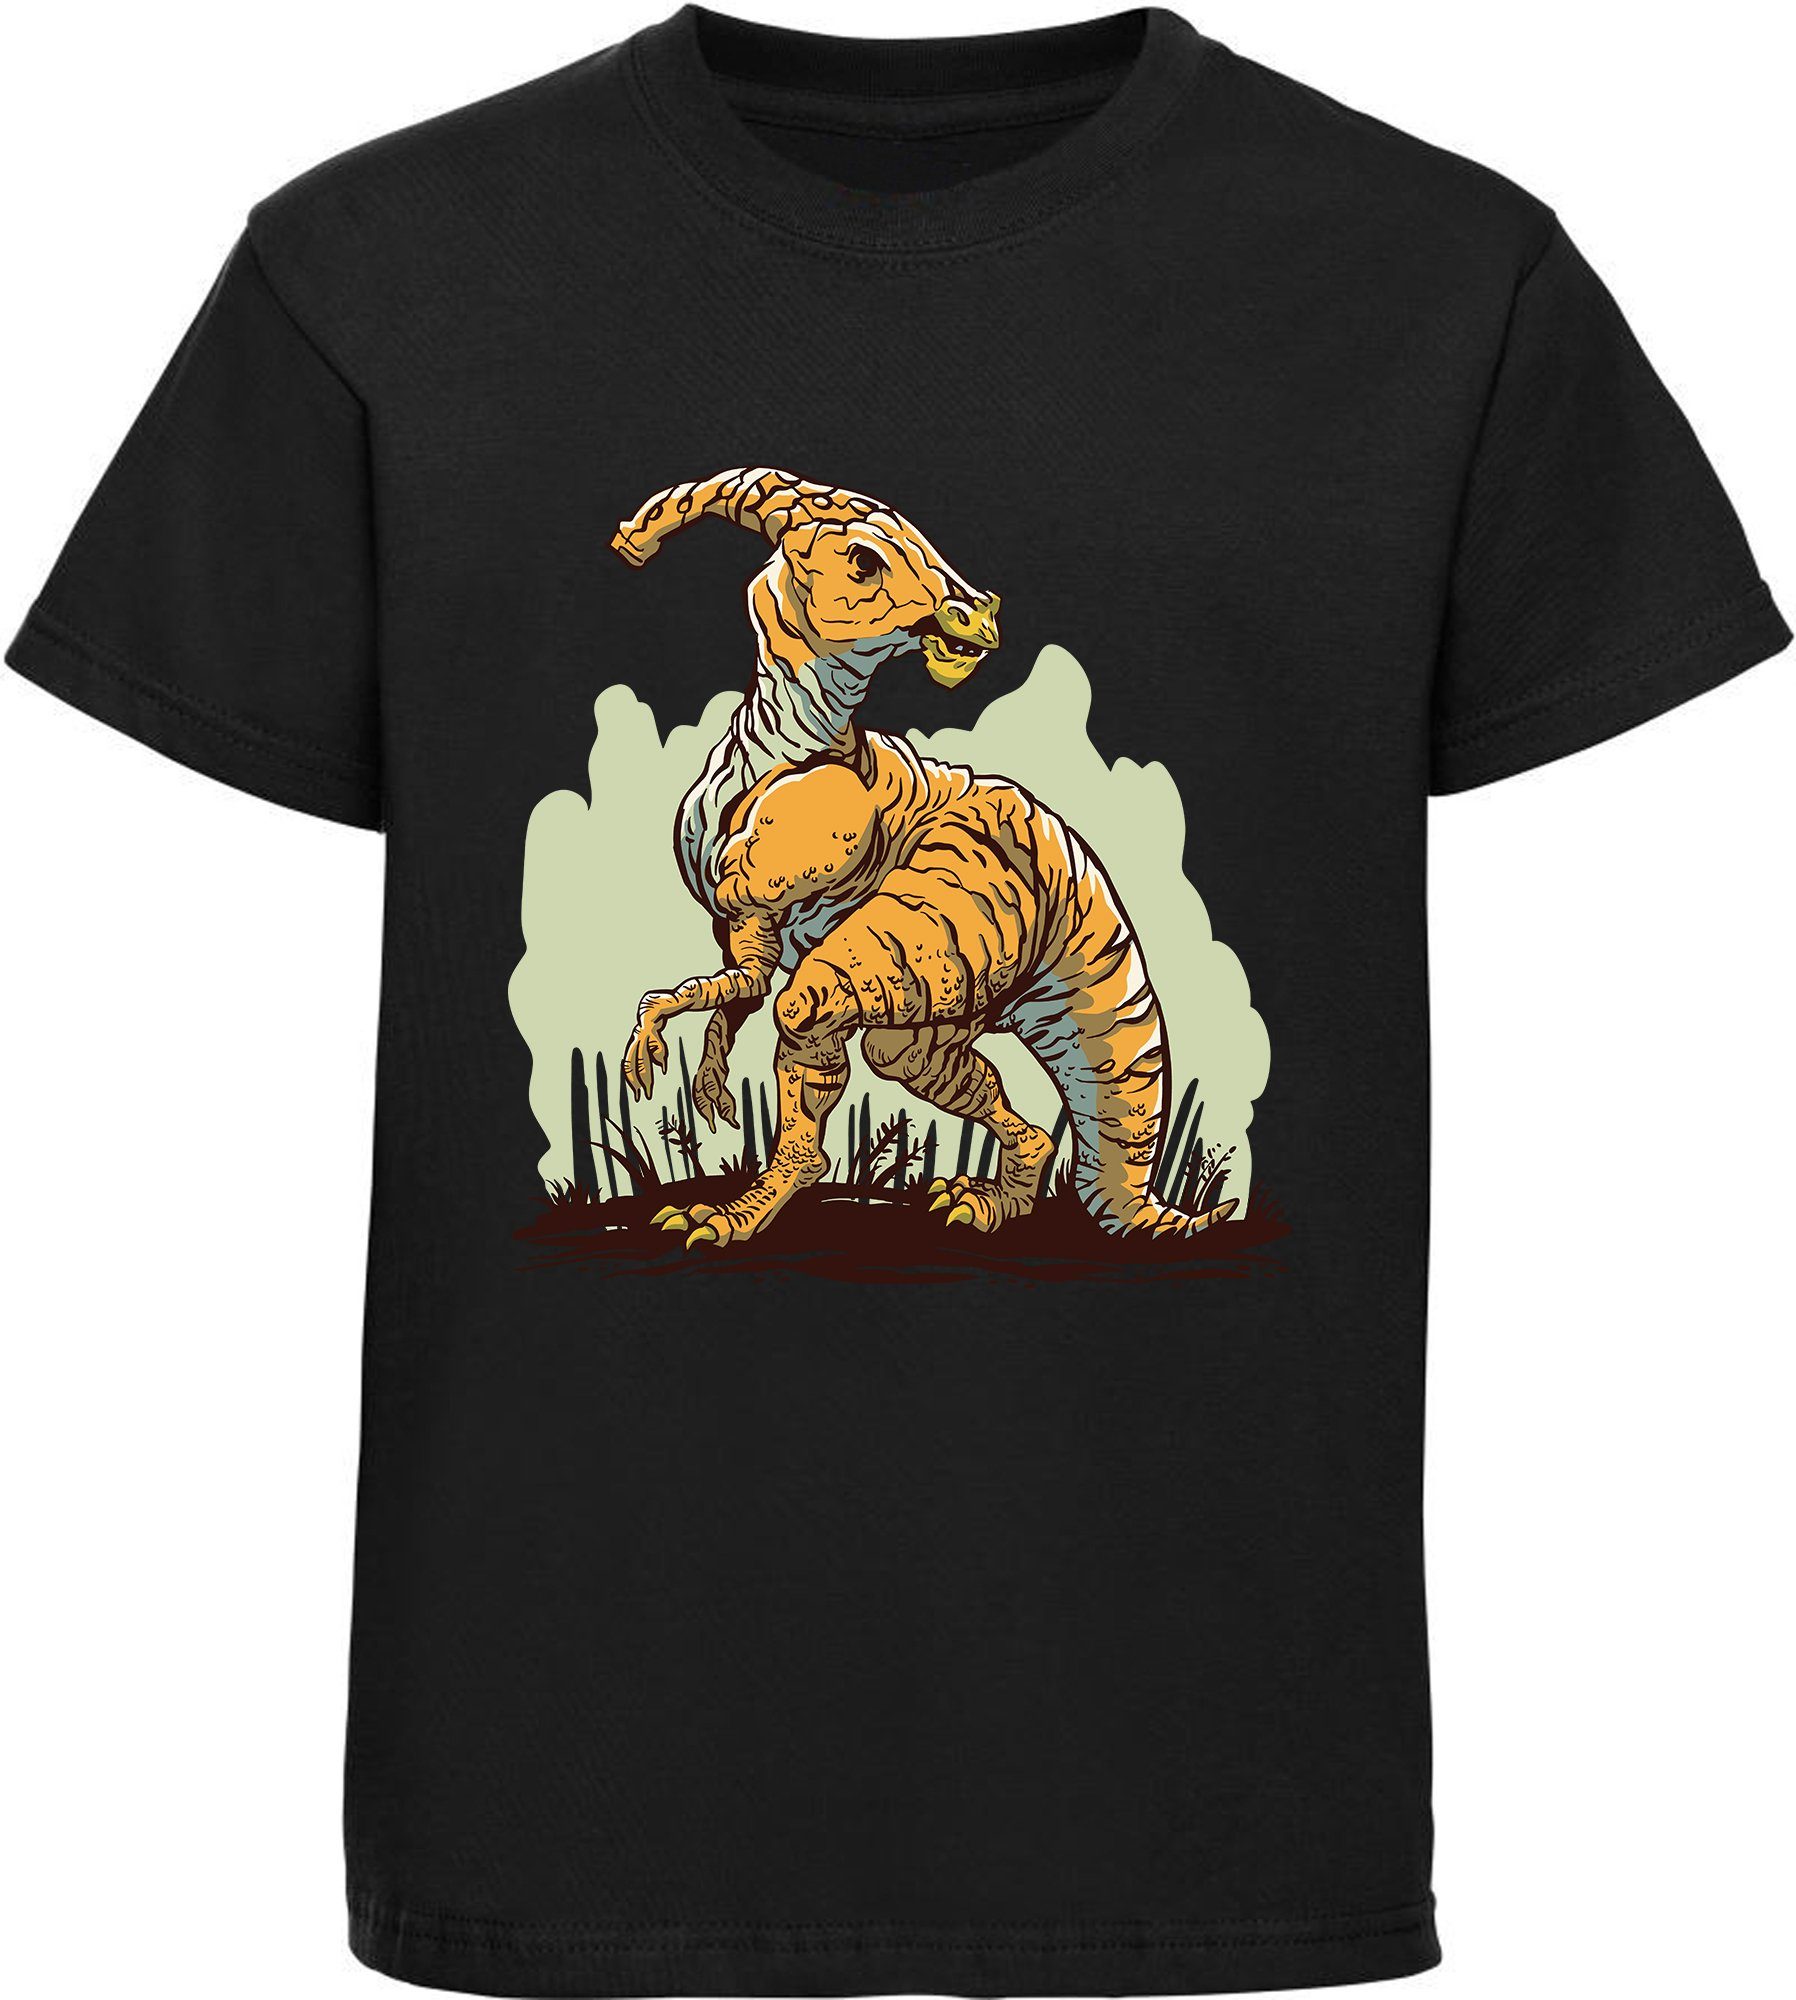 Print-Shirt T-Shirt weiß, blau, Baumwollshirt rot, MyDesign24 Parasaurolophus schwarz, i99 Dino, Kinder mit bedrucktes